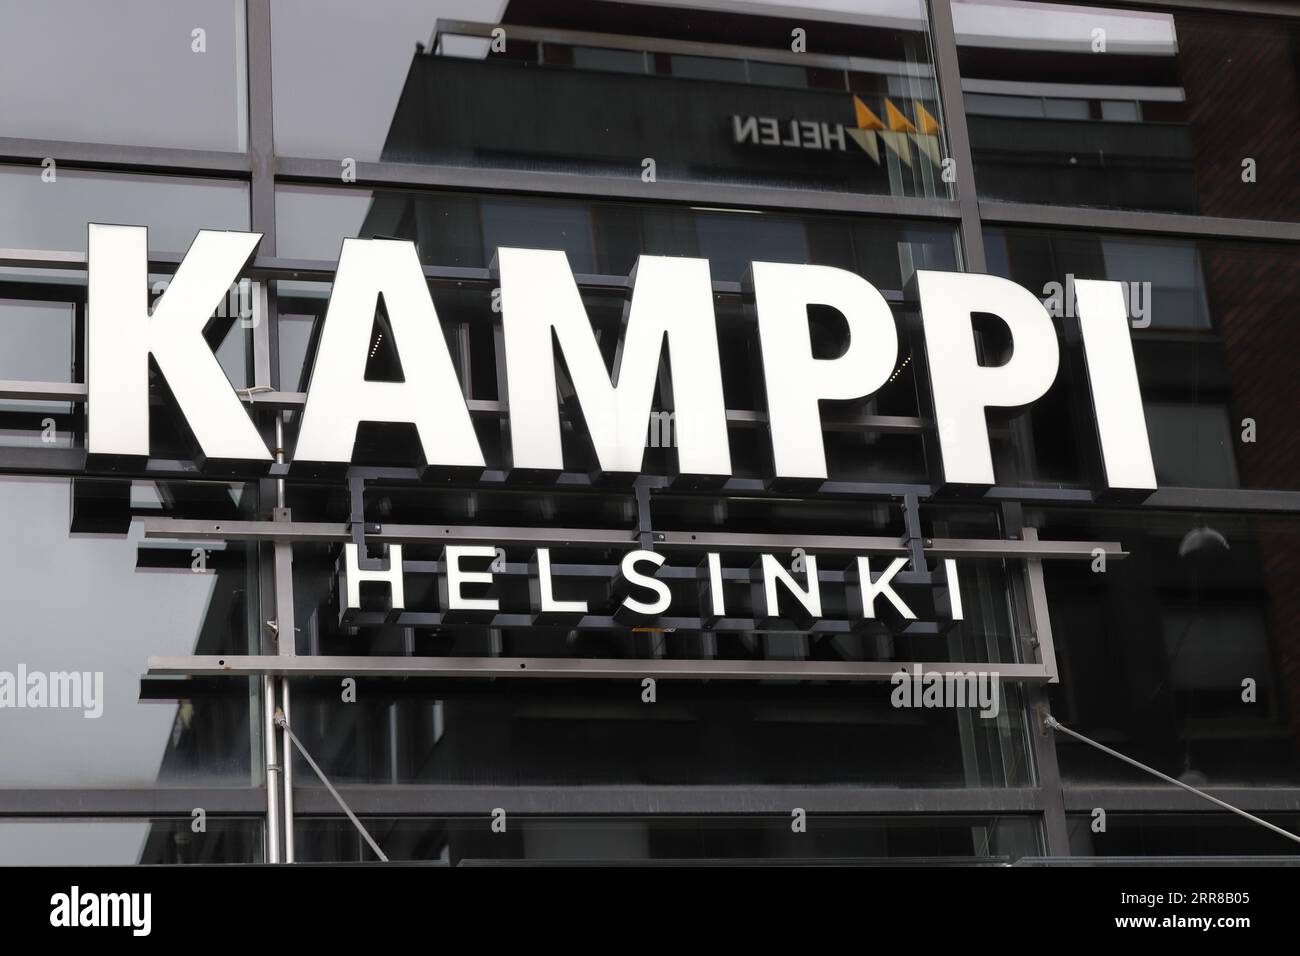 Helsinki kamppi center hi-res stock photography and images - Alamy